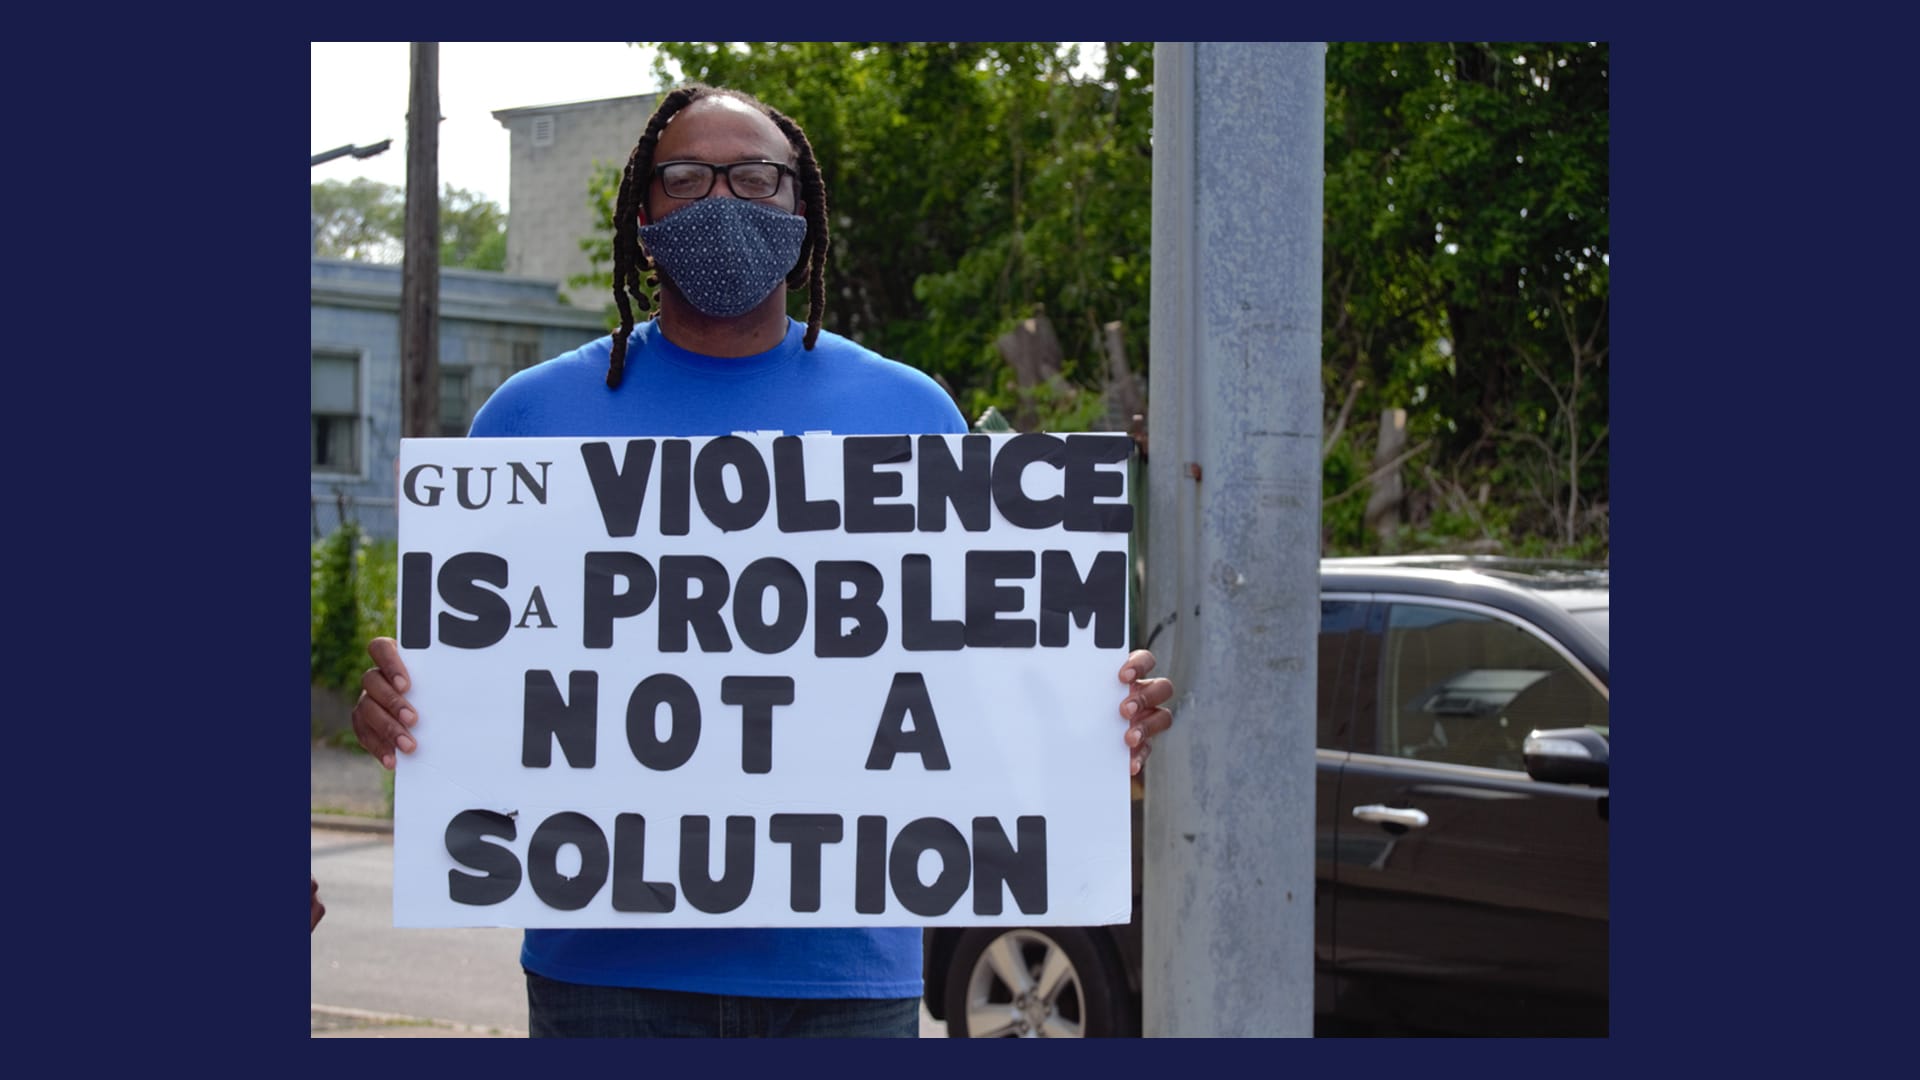 SNUG program aims to stop city gun violence